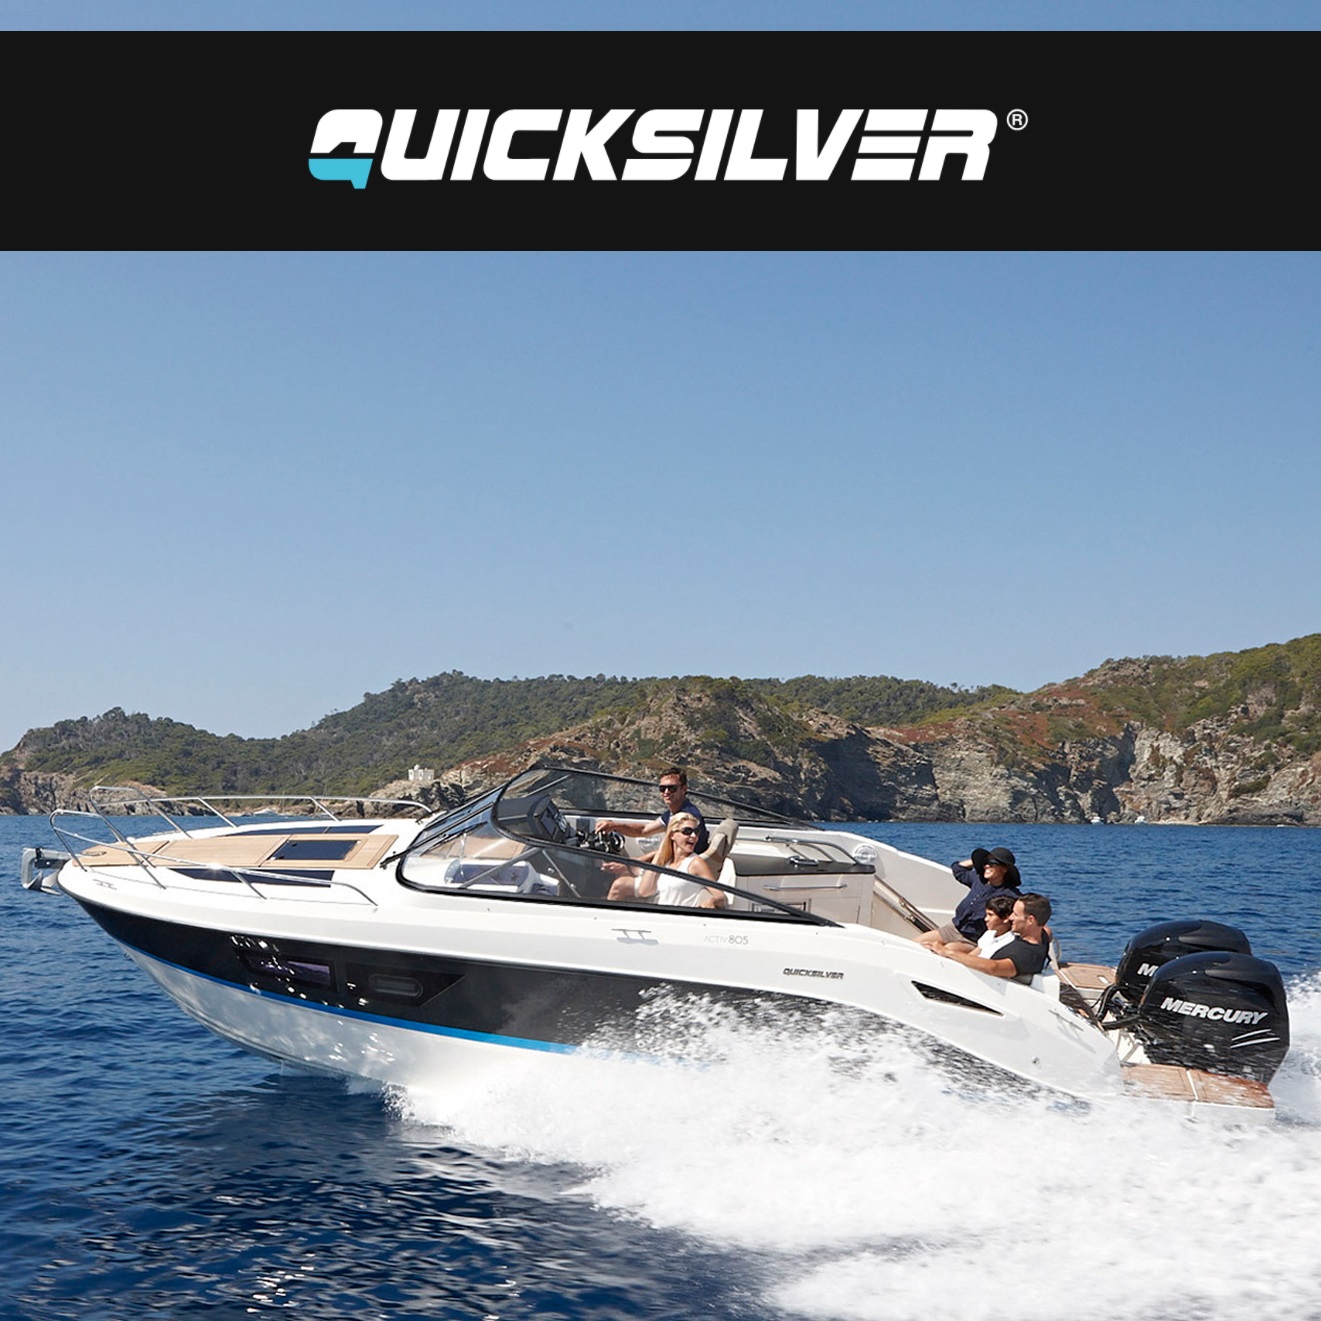 Quicksilver boats